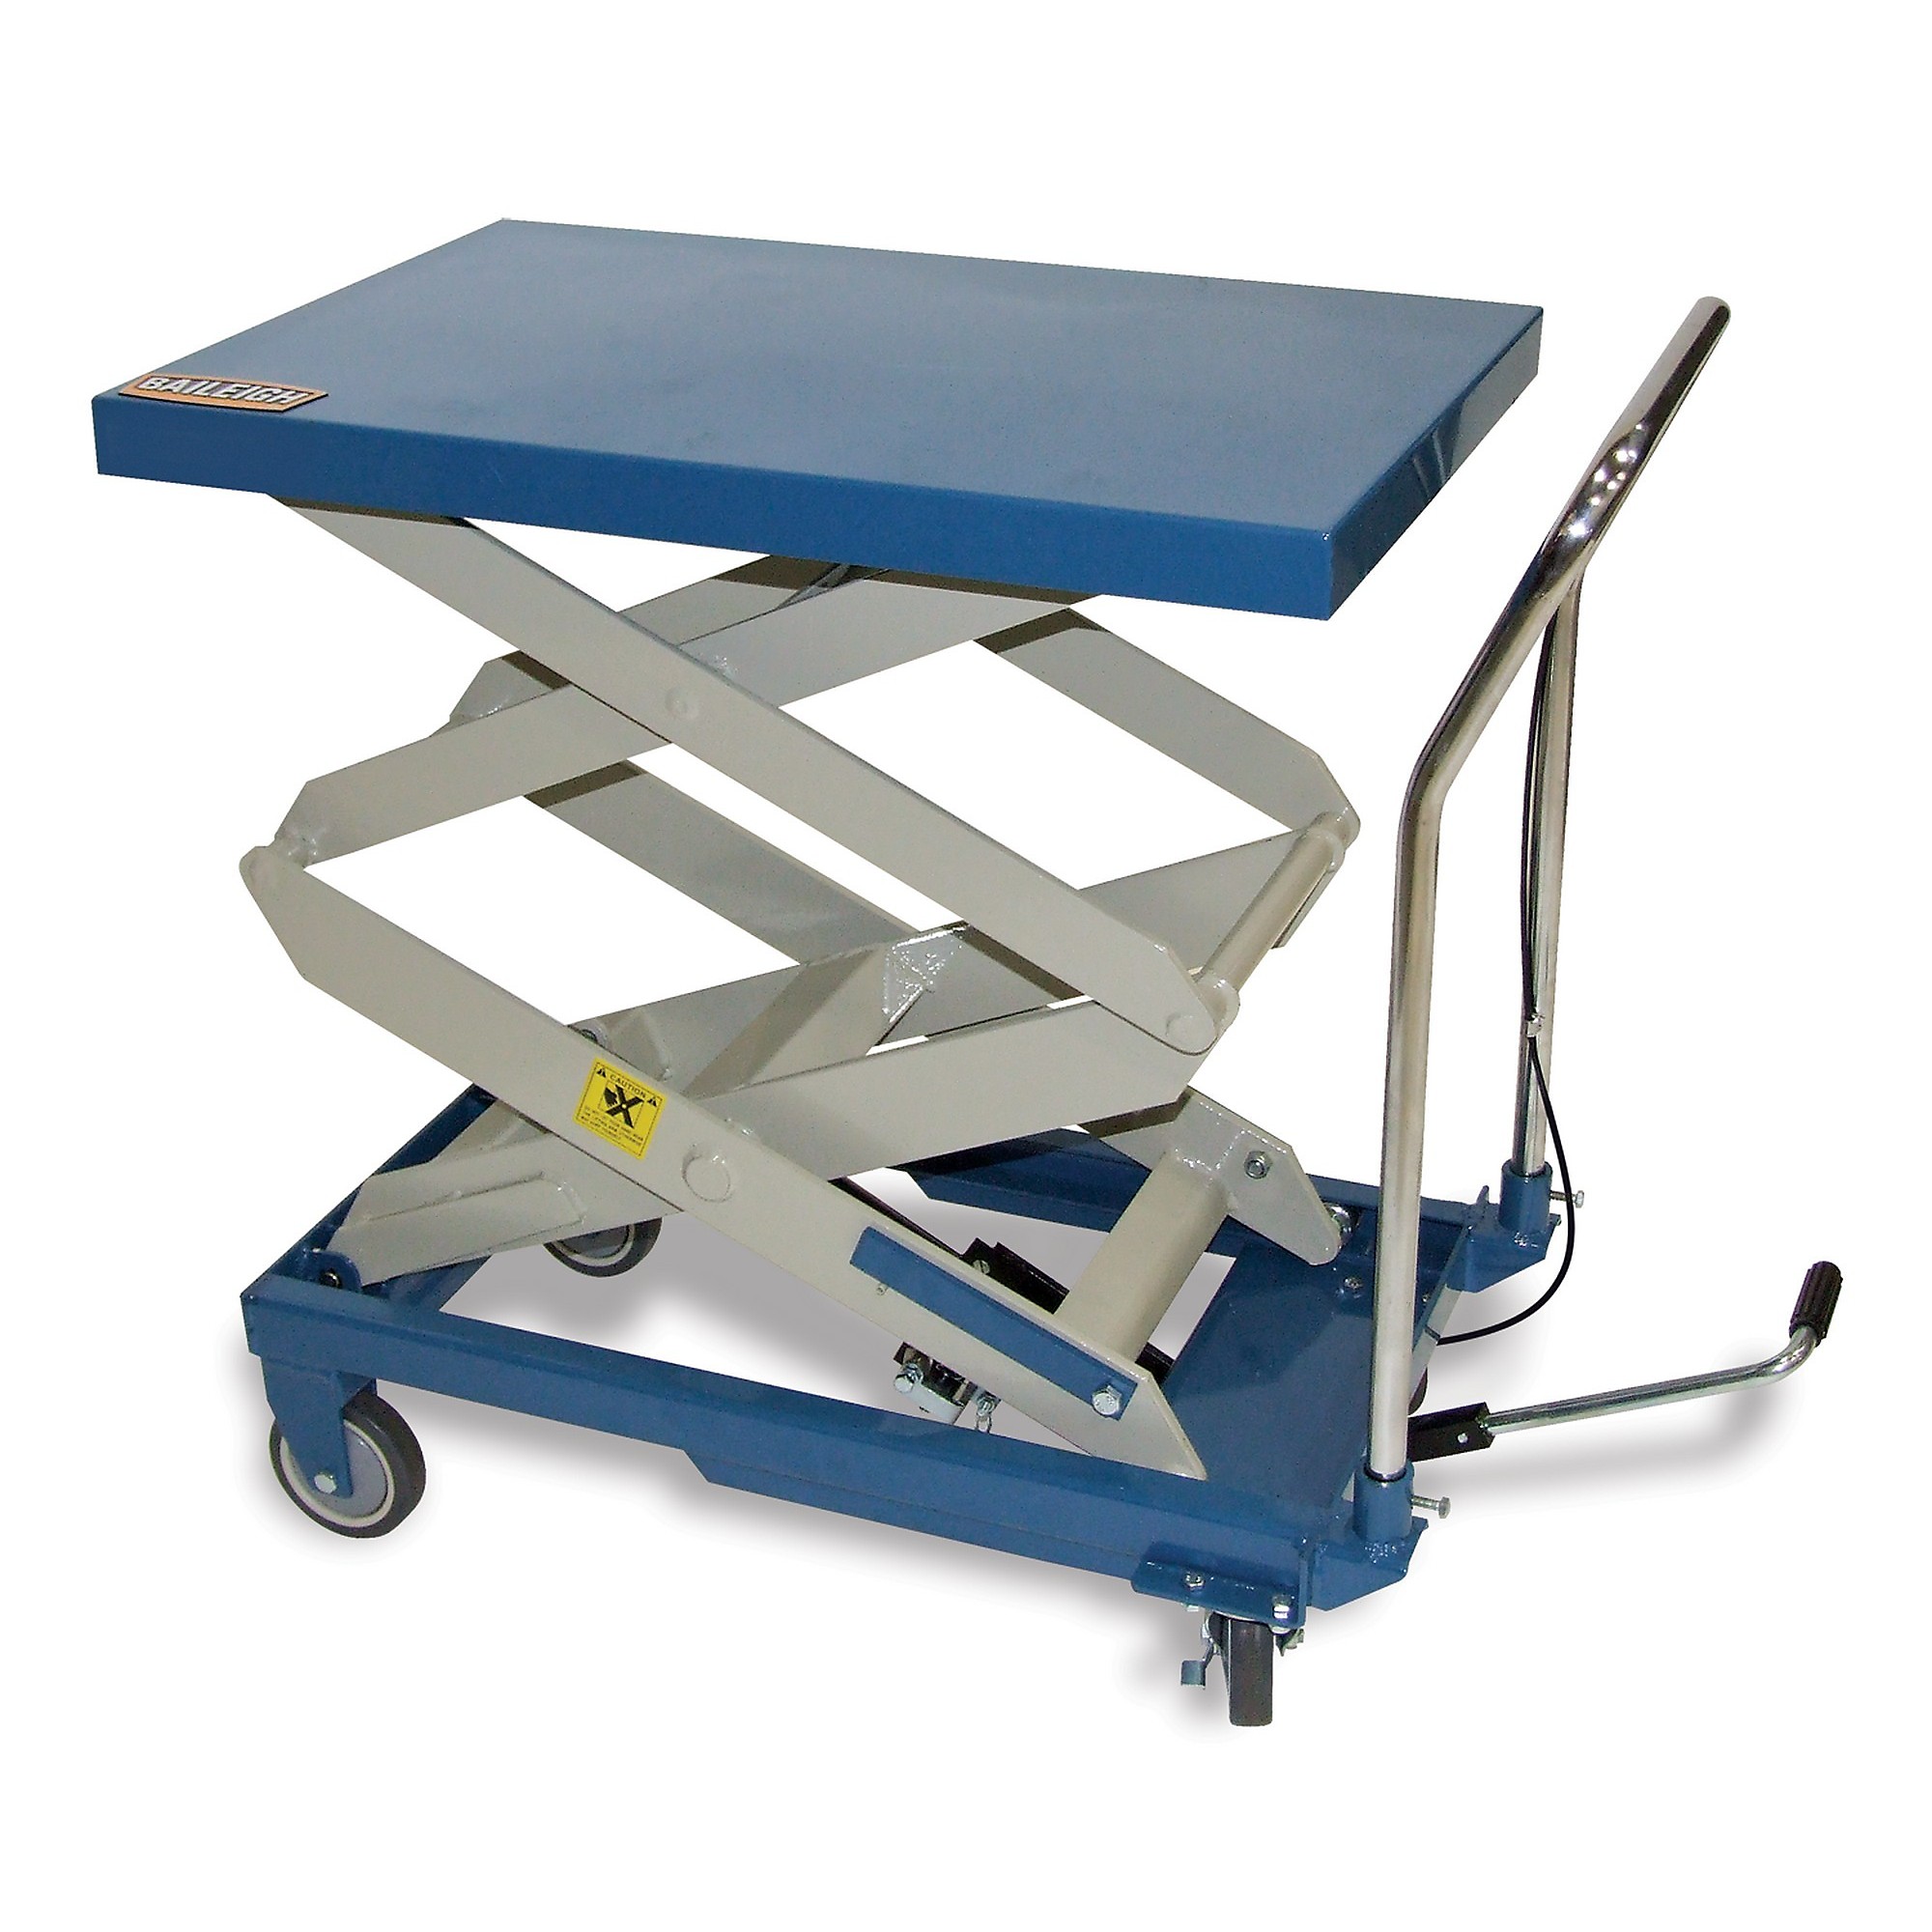 Baileigh, Hydraulic Lift Table, Capacity 660 lb, Model 1000579